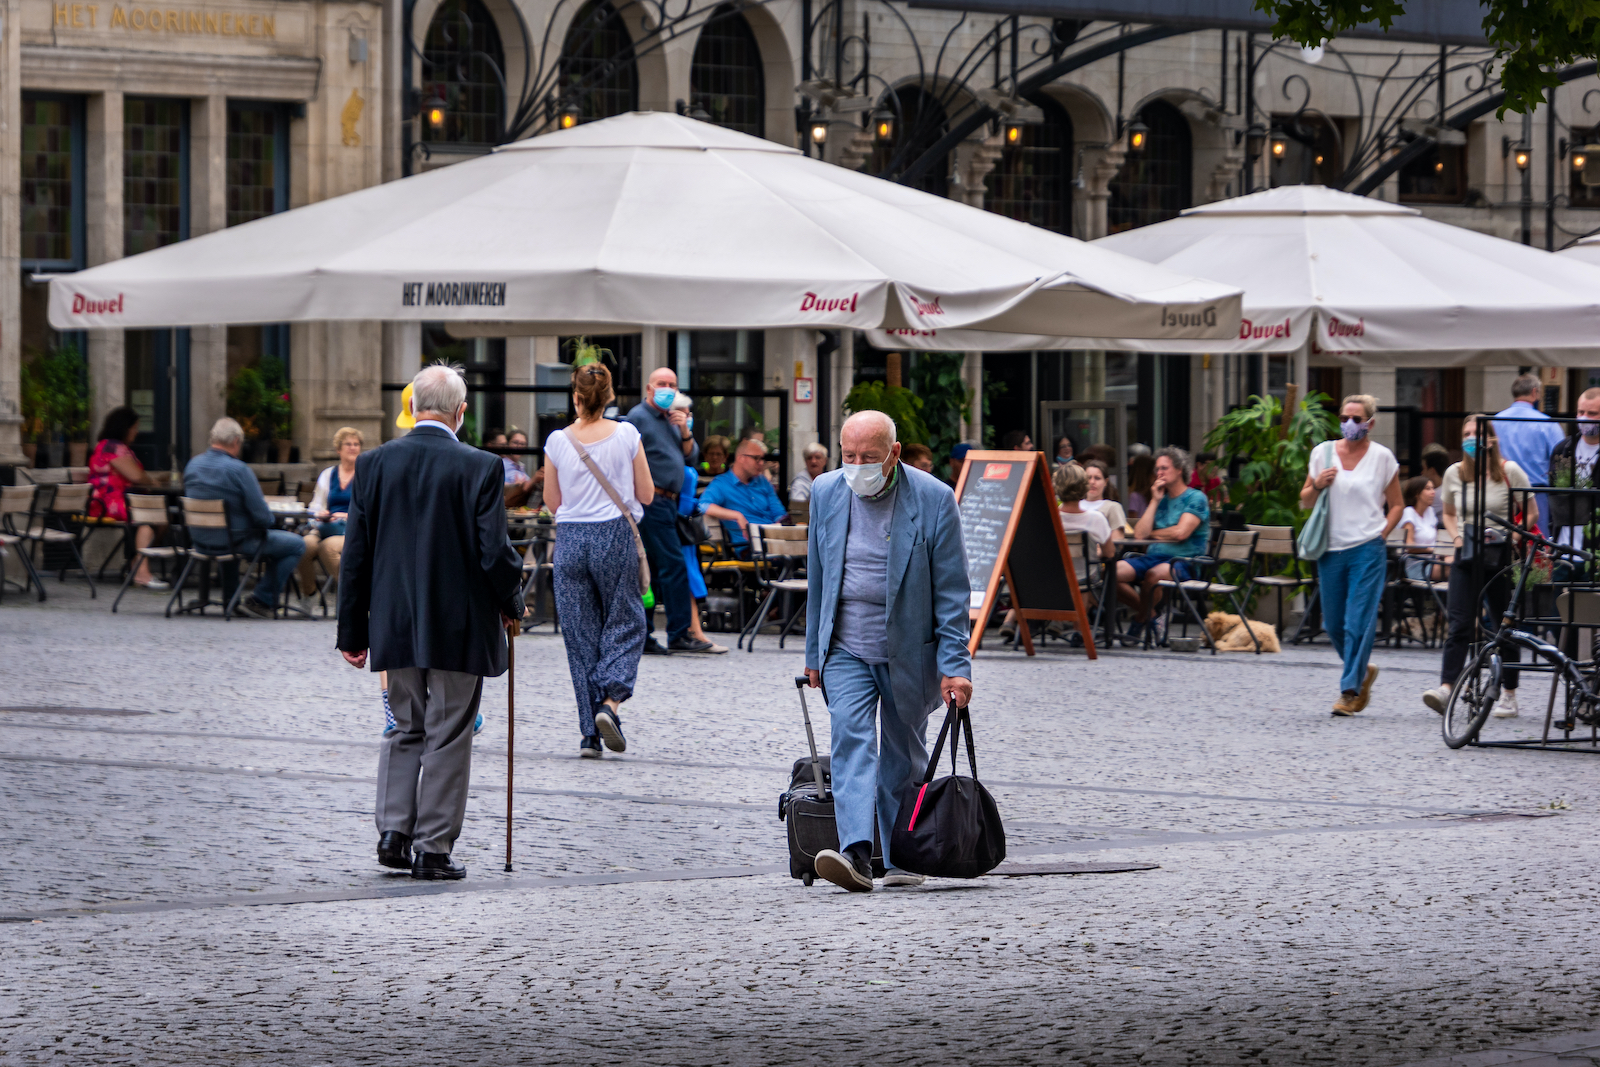 Seniorzy na ulicy w Leuven w Belgii, fot. Tina Vander Molen / Shutterstock.com